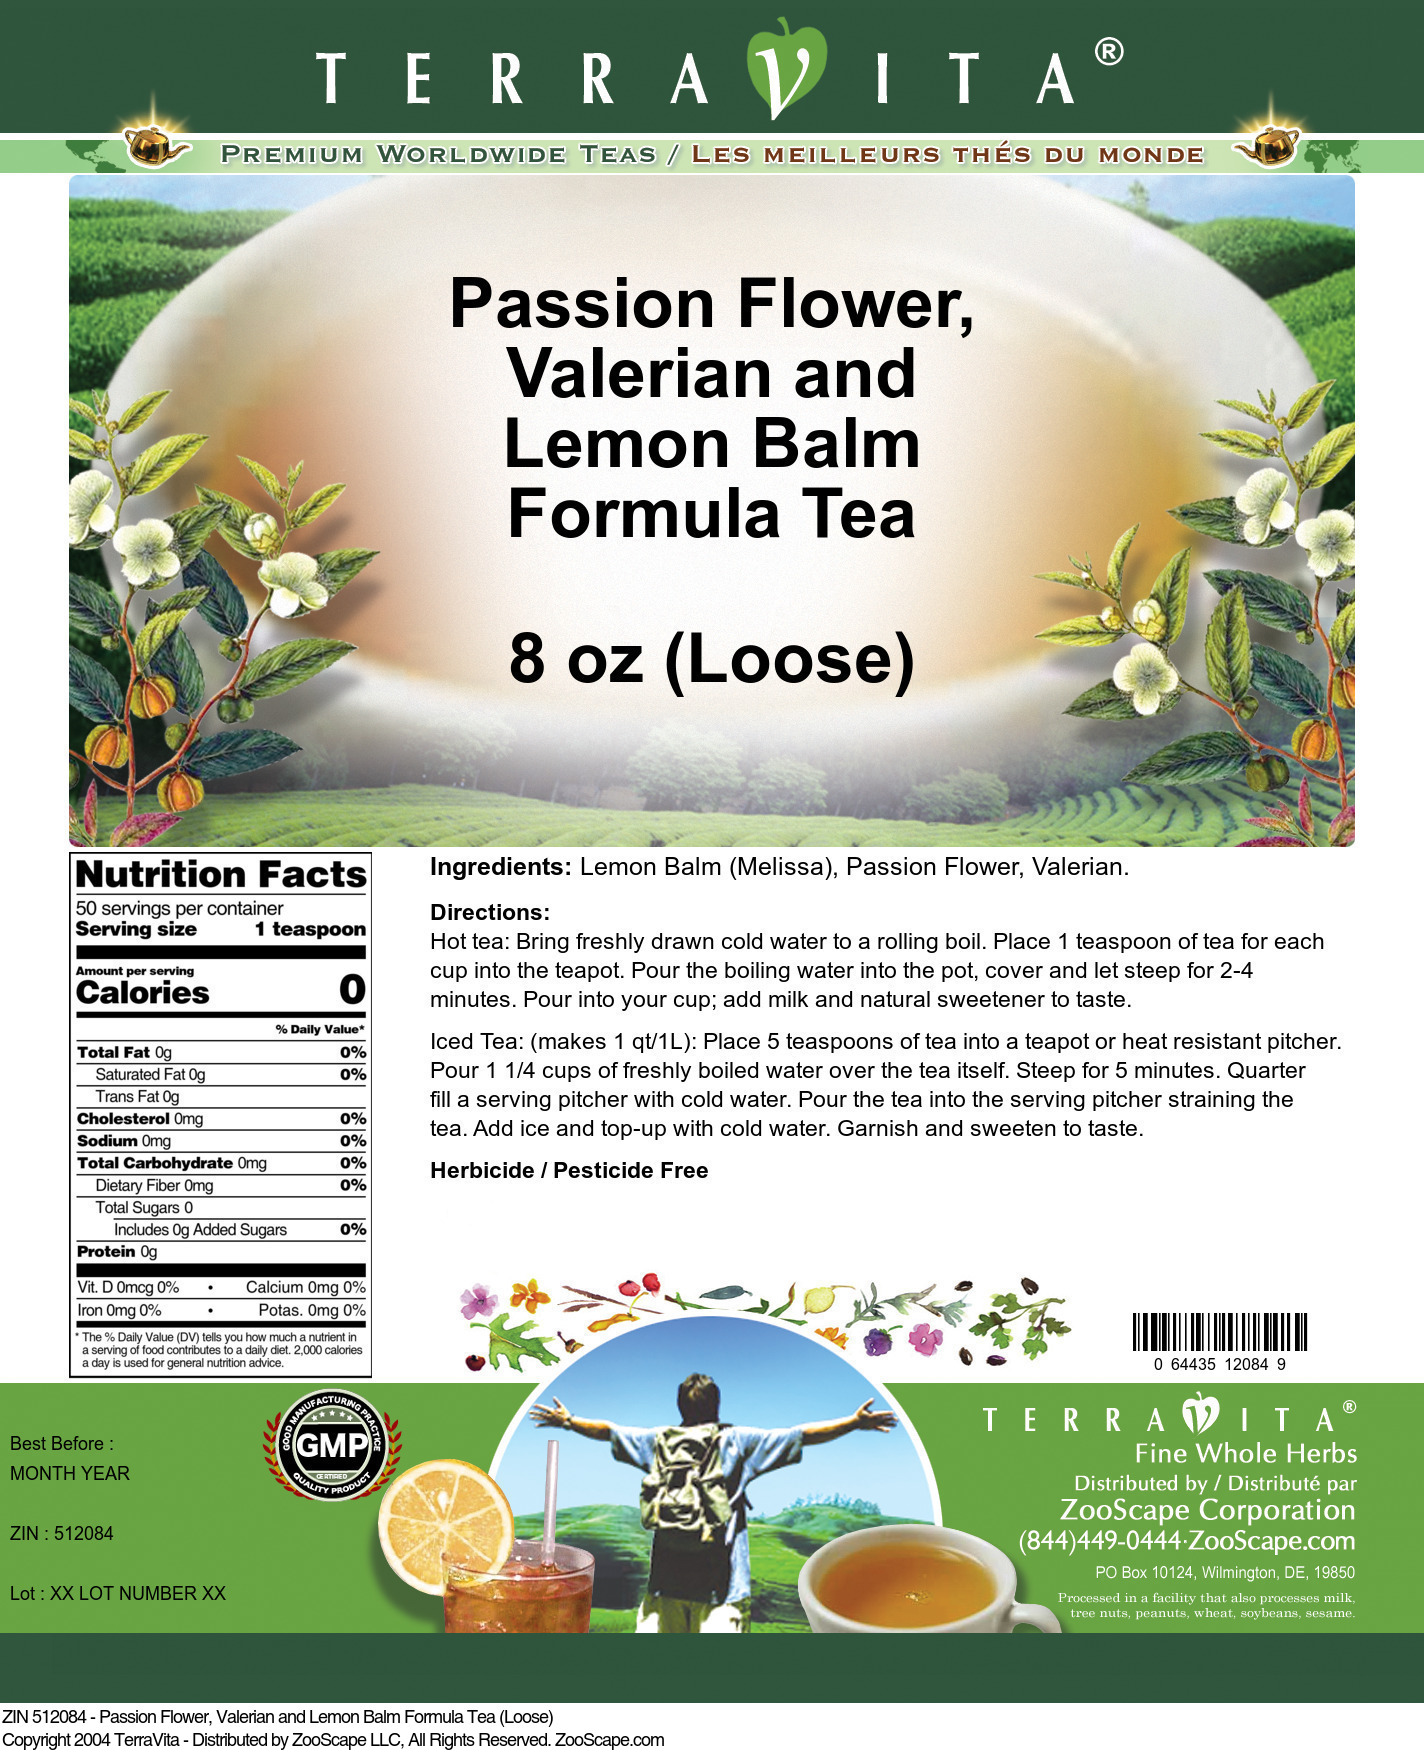 Passion Flower, Valerian and Lemon Balm Formula Tea (Loose) - Label